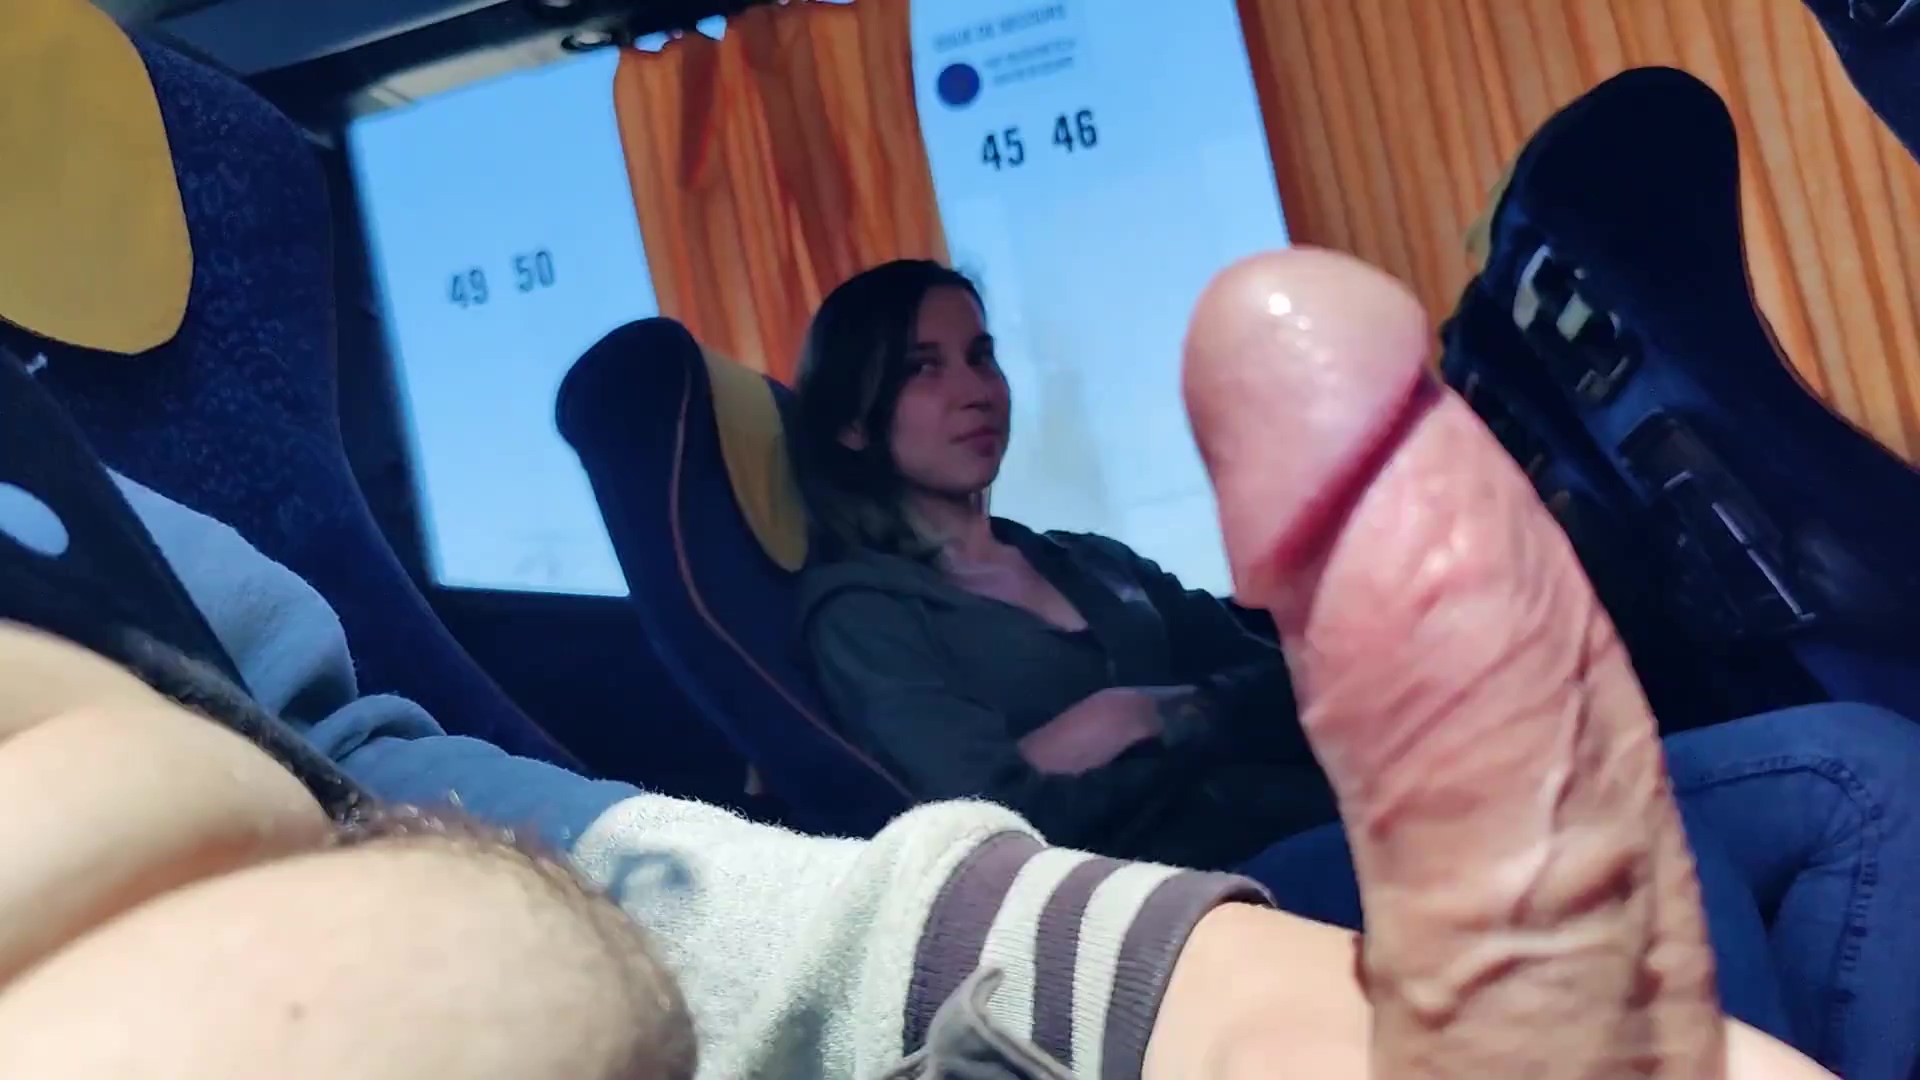 Diana Kane Gropped In Bus Full Video Free Porn